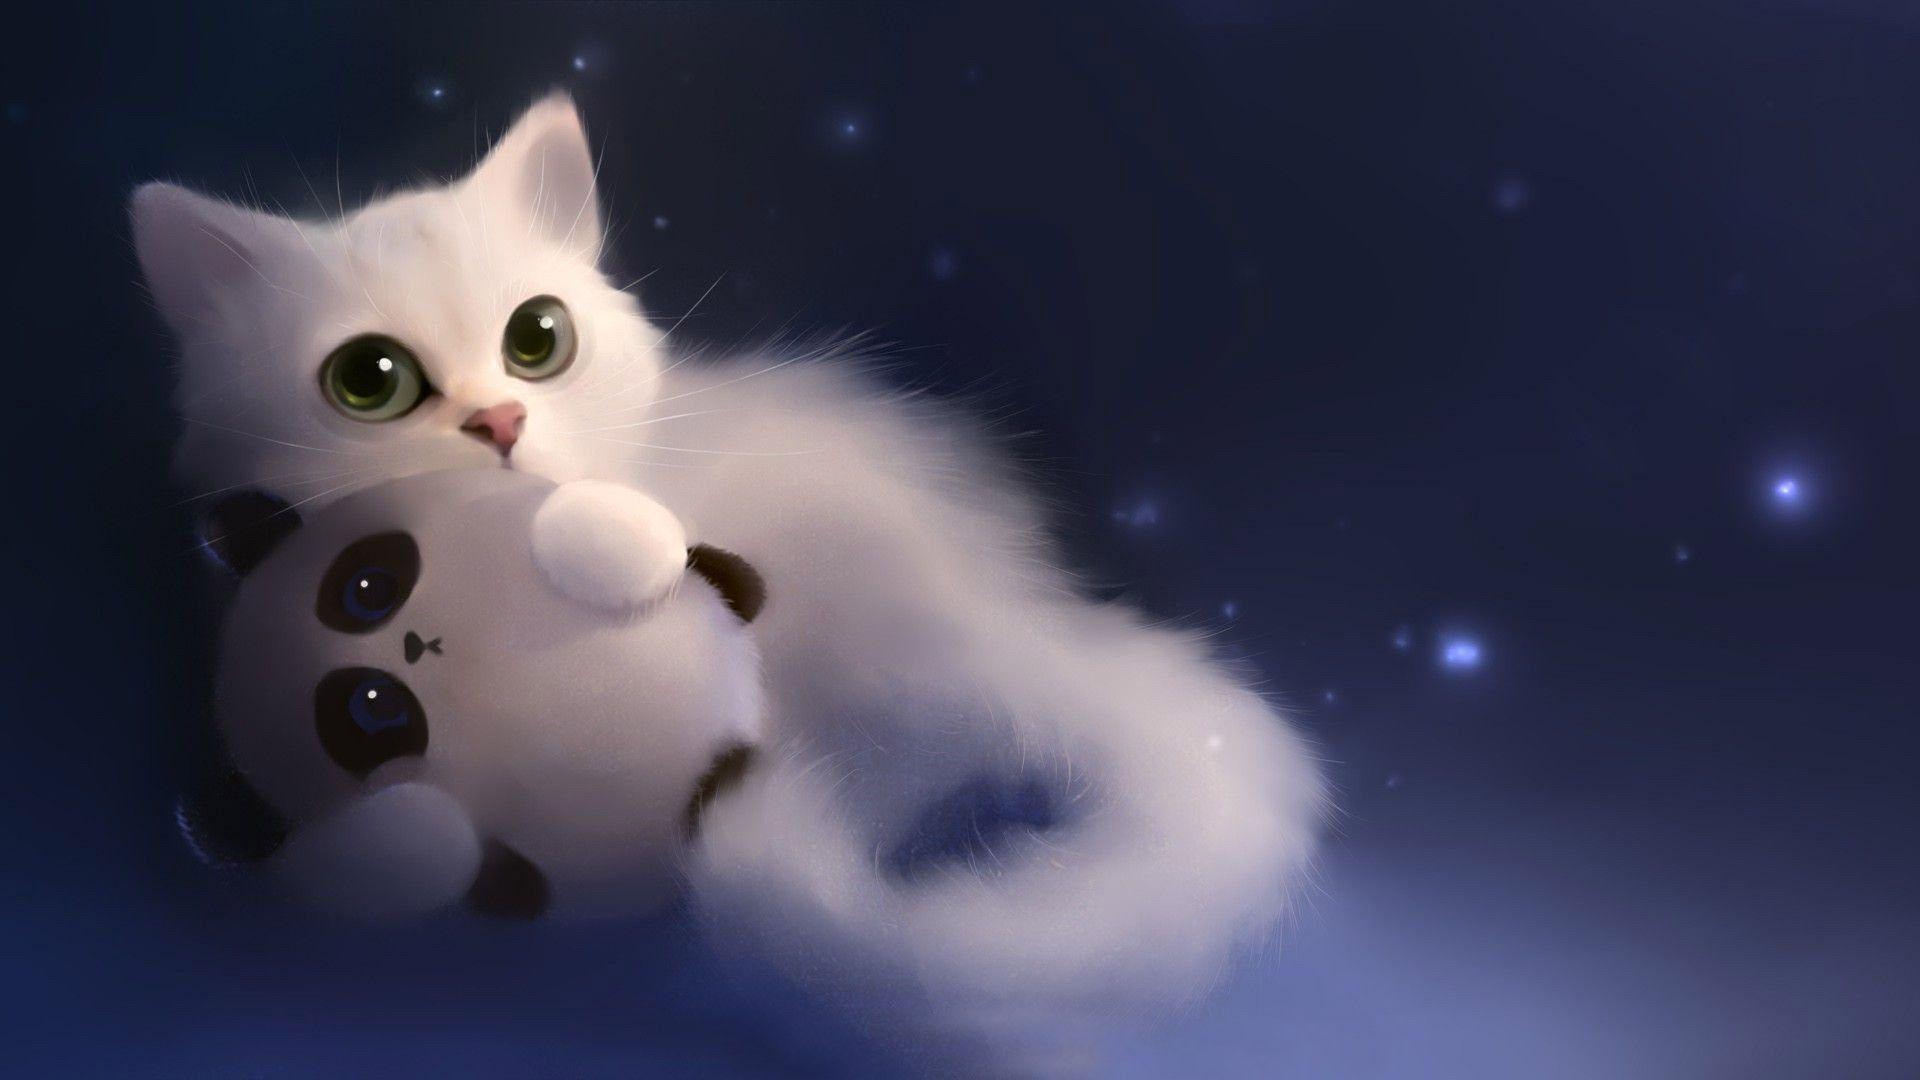 14833 Anime Cat Images Stock Photos  Vectors  Shutterstock